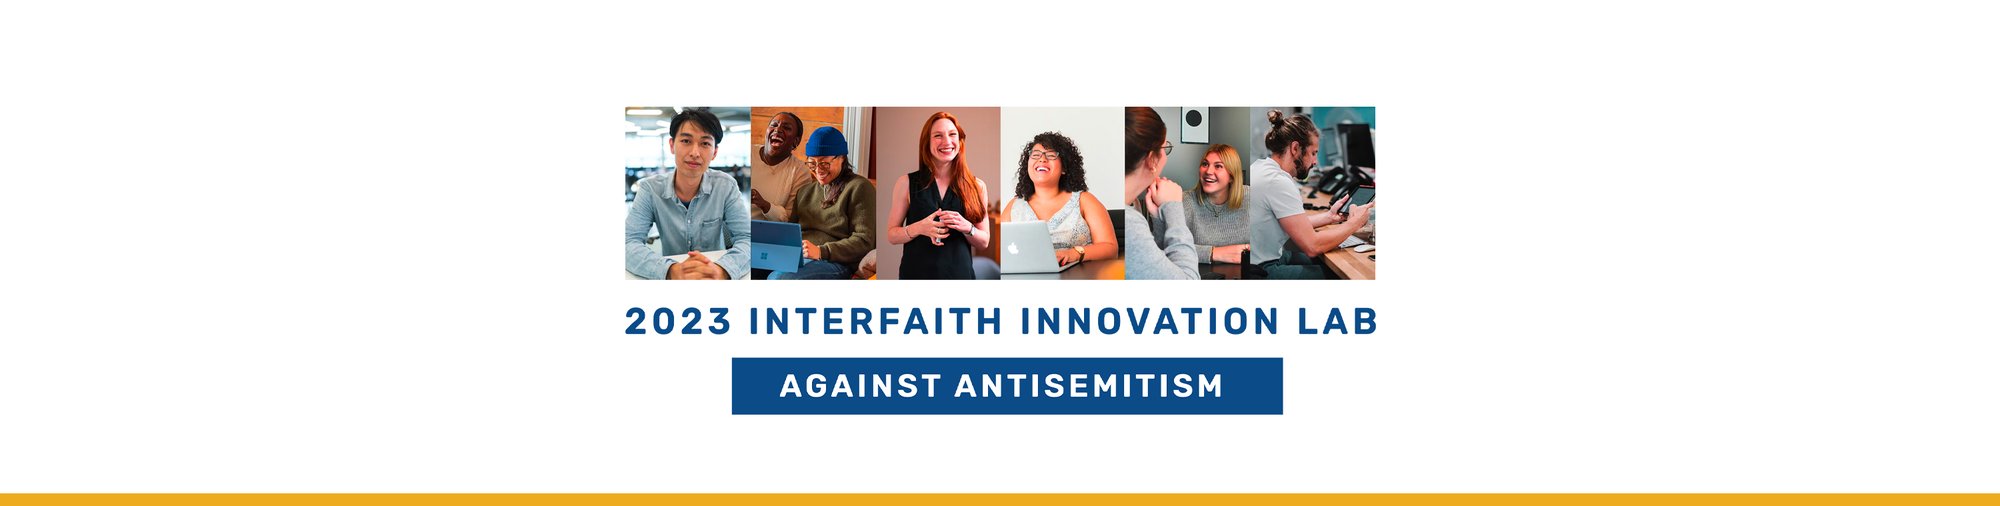 2023 Interfaith Innovation Lab Banner (08162023)